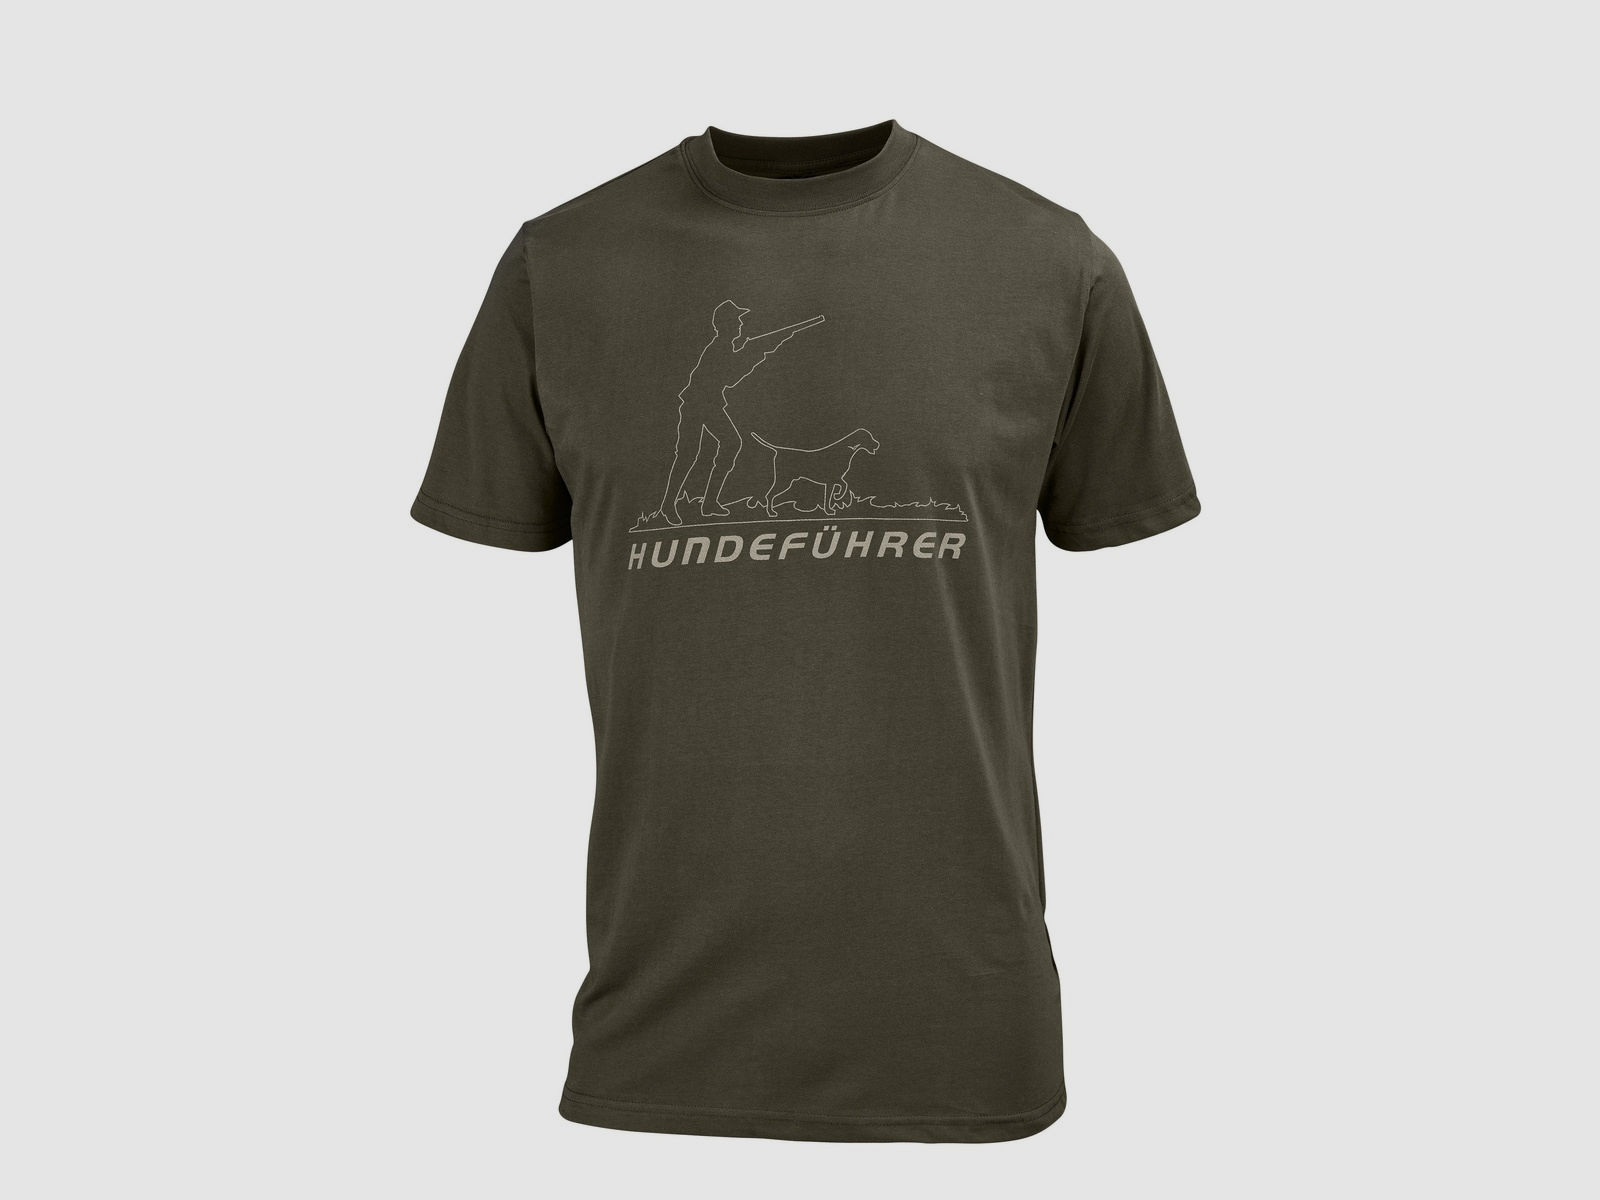 Hubertus Herren-T-Shirt Hundeführer